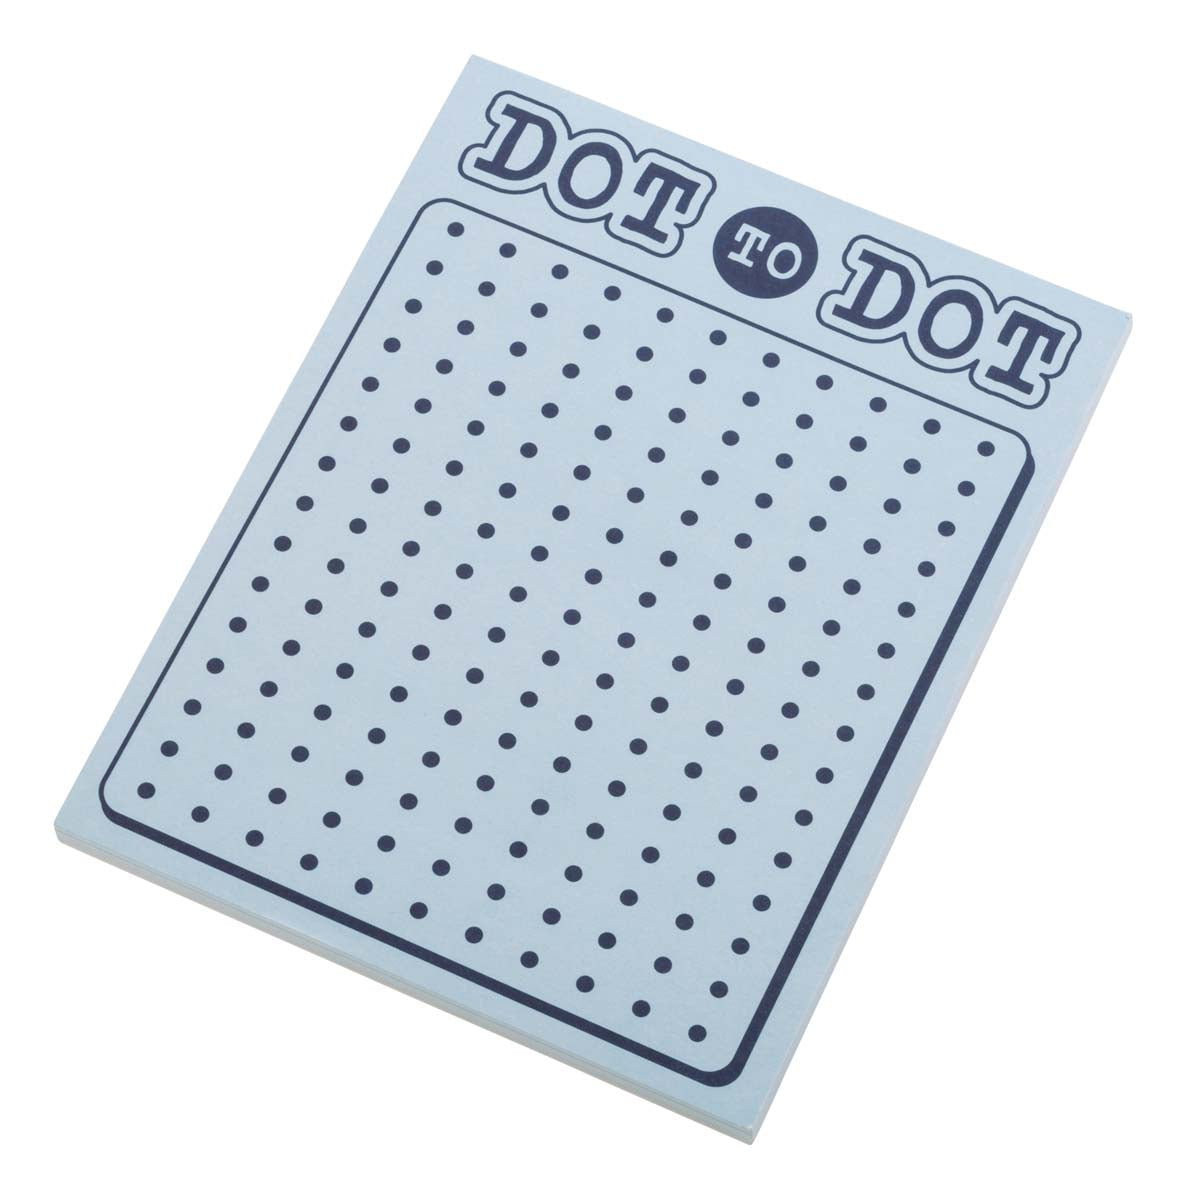 Dot to Dot notepad